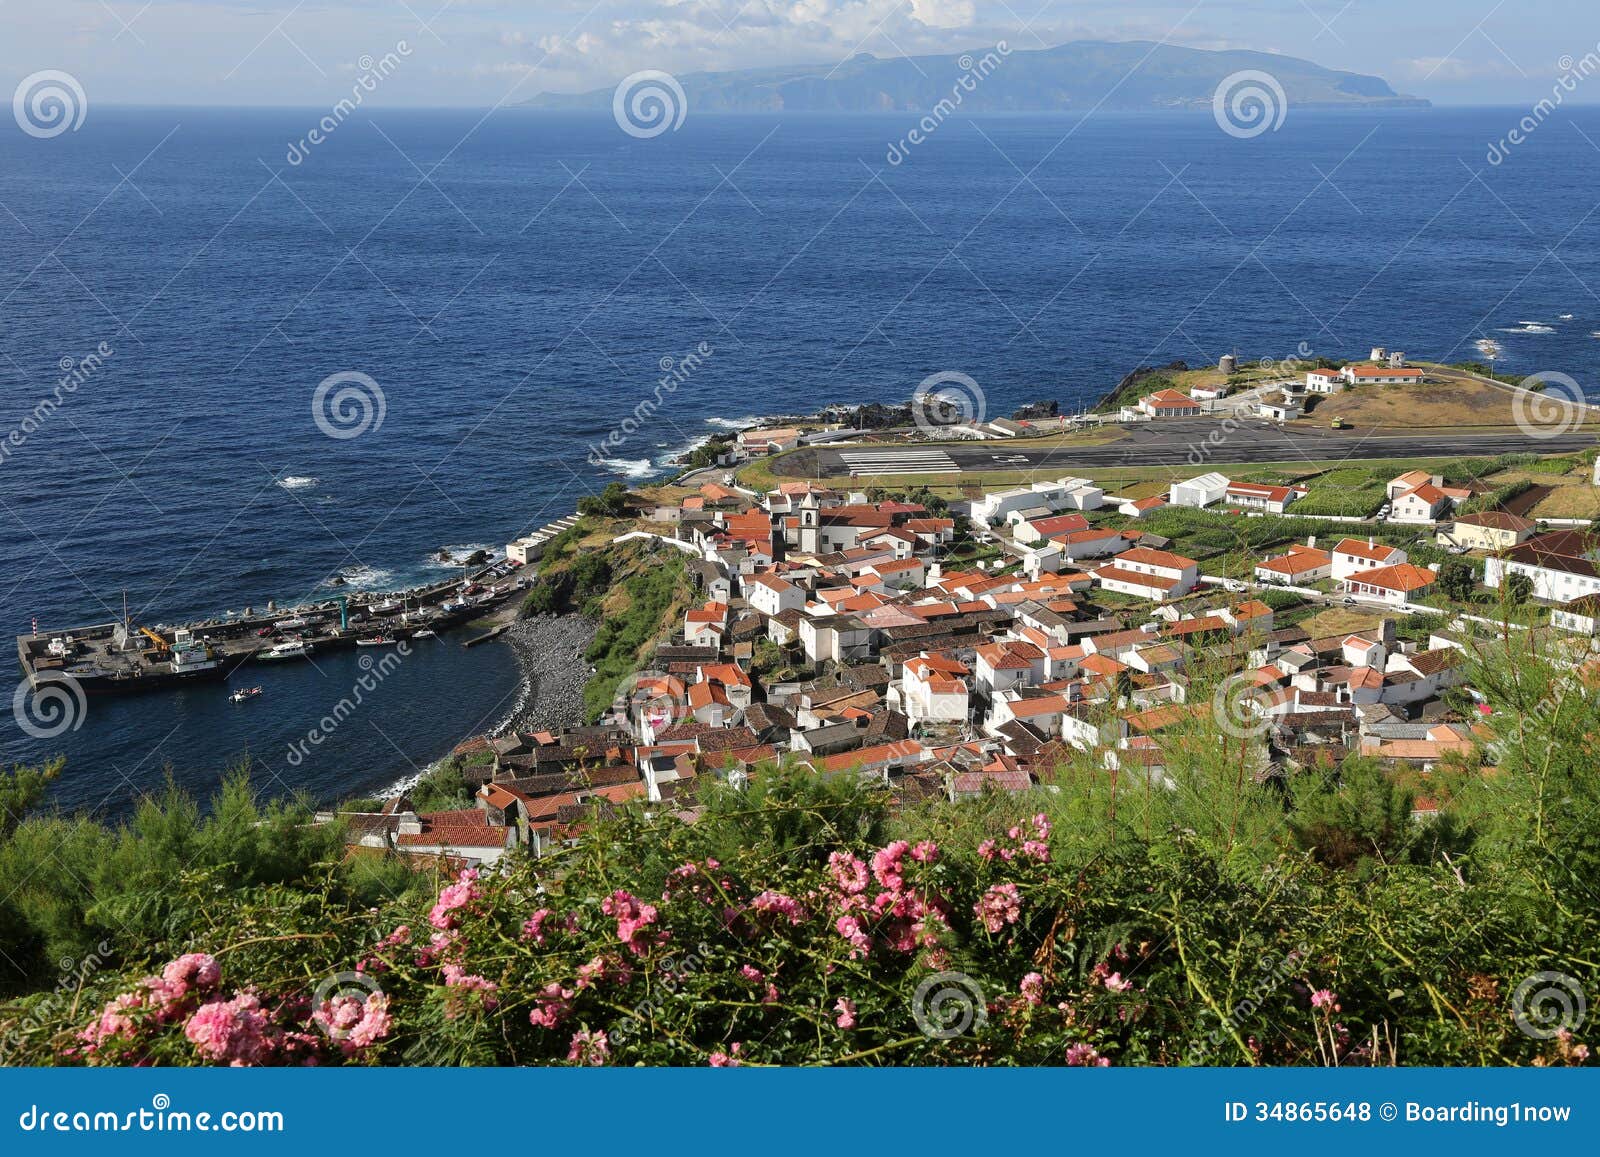 island of corvo in the atlantic ocean azores portugal